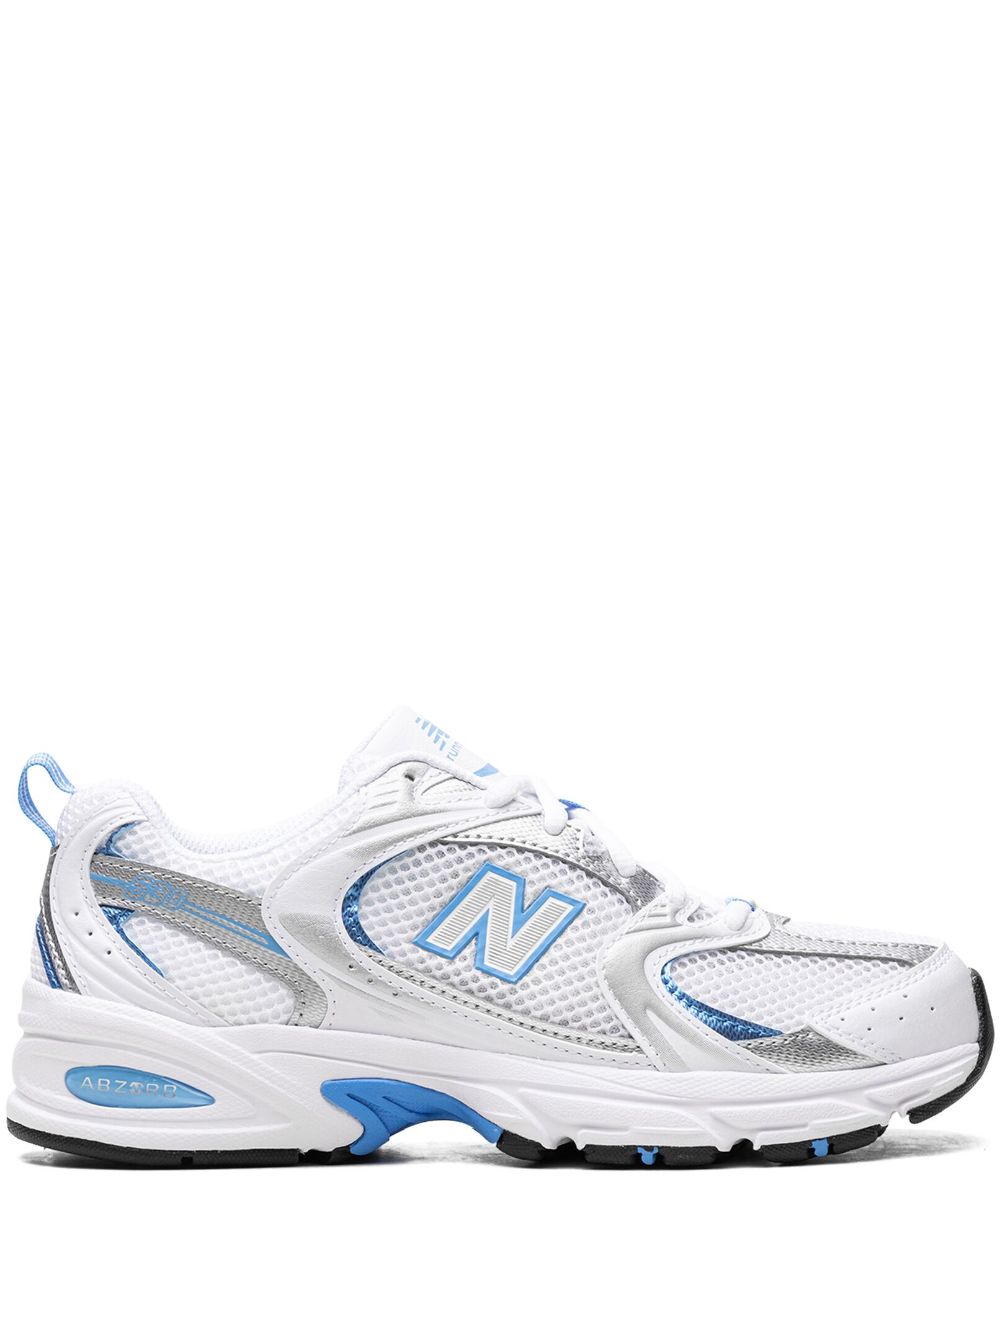 New Balance 530 "Metallic Blue" sneakers - White